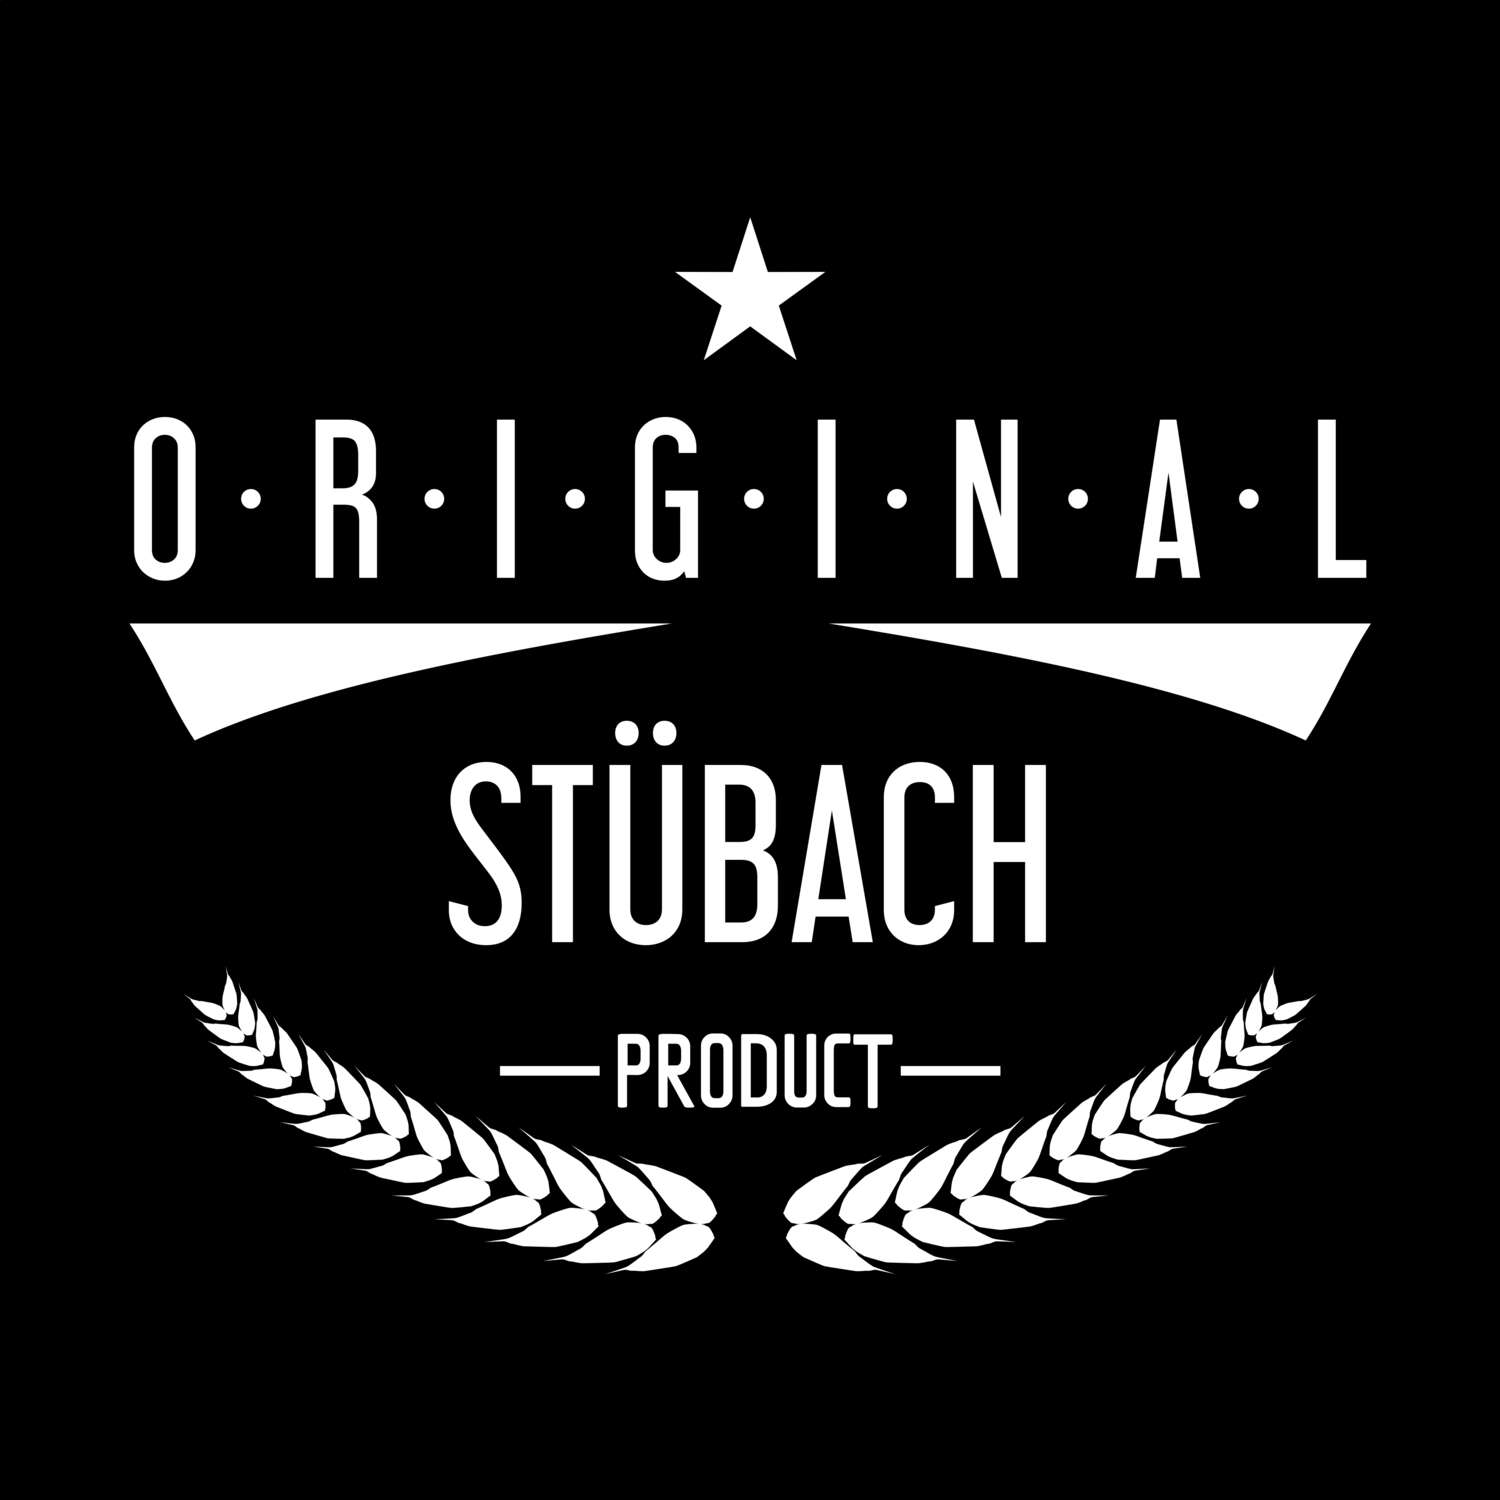 Stübach T-Shirt »Original Product«